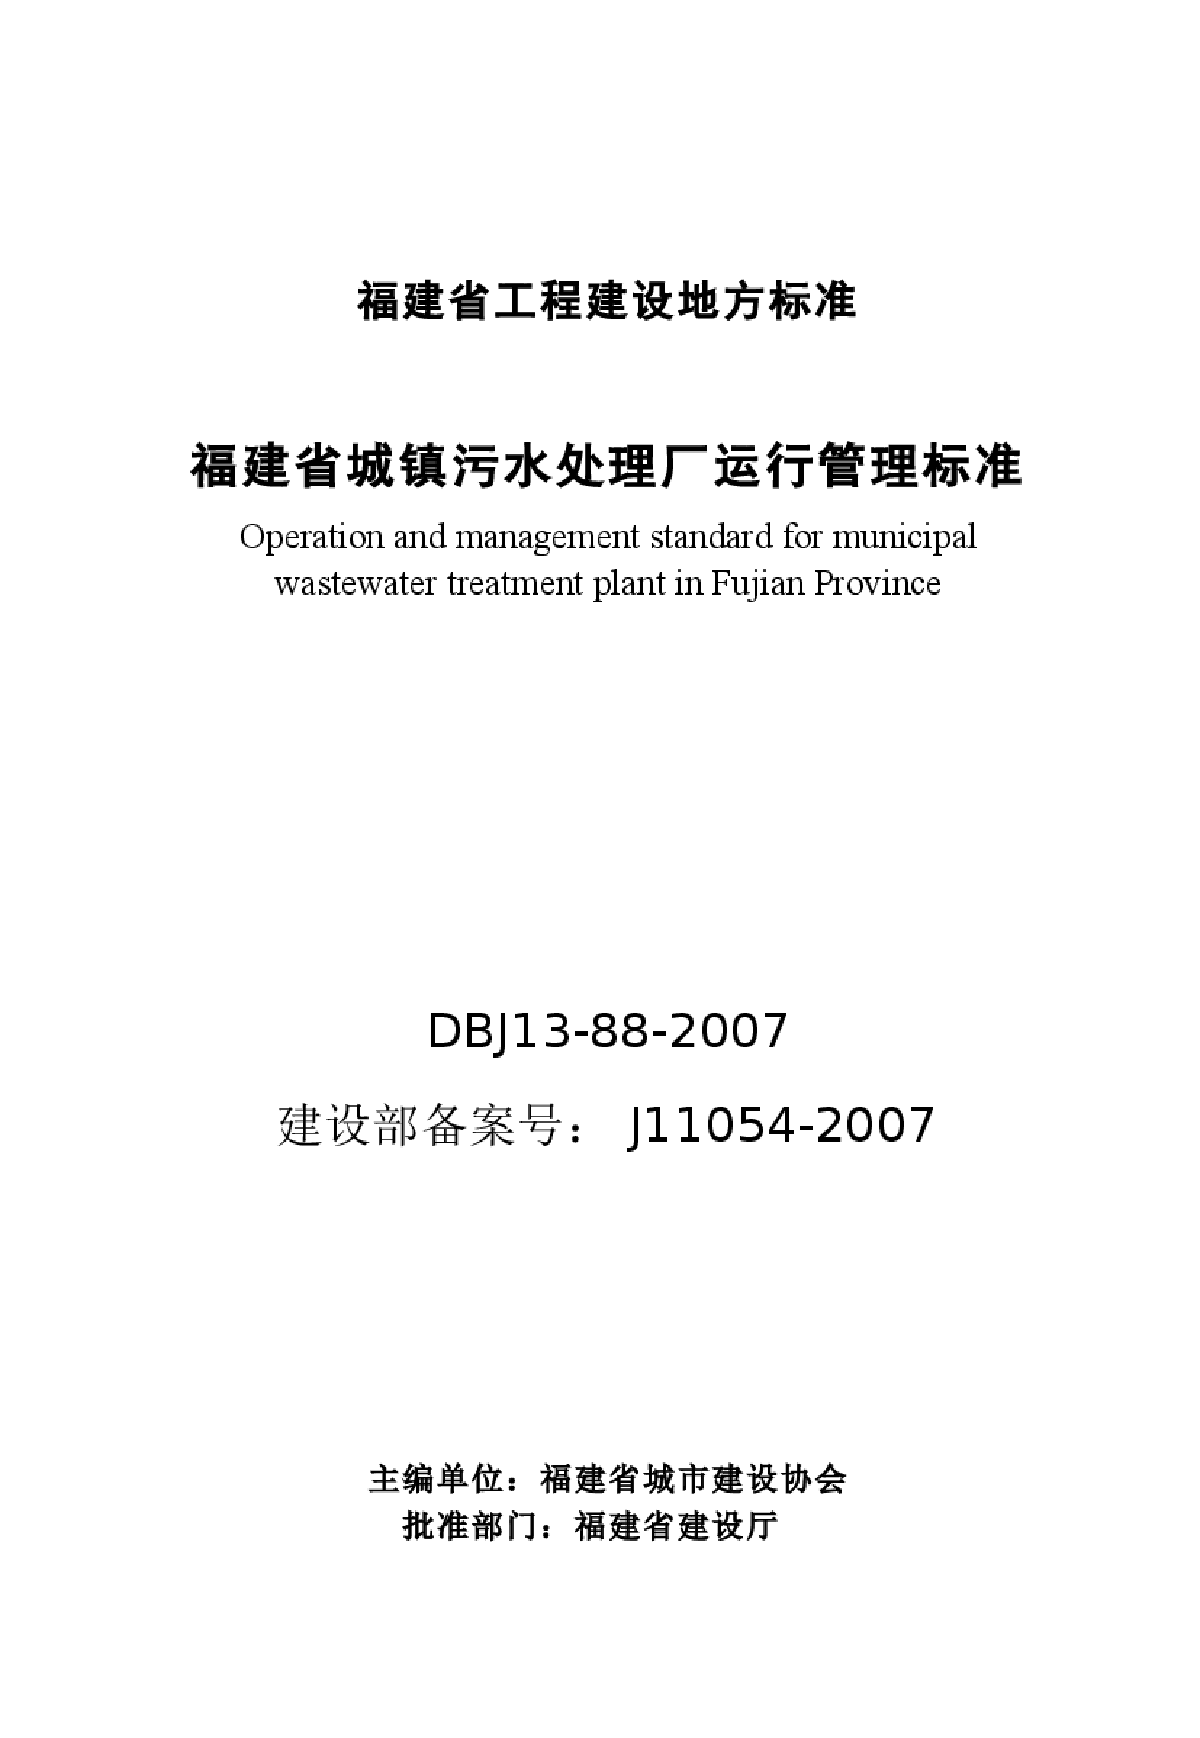 DBJ13-88-2007 福建省城镇污水处理厂运行管理标准-图二